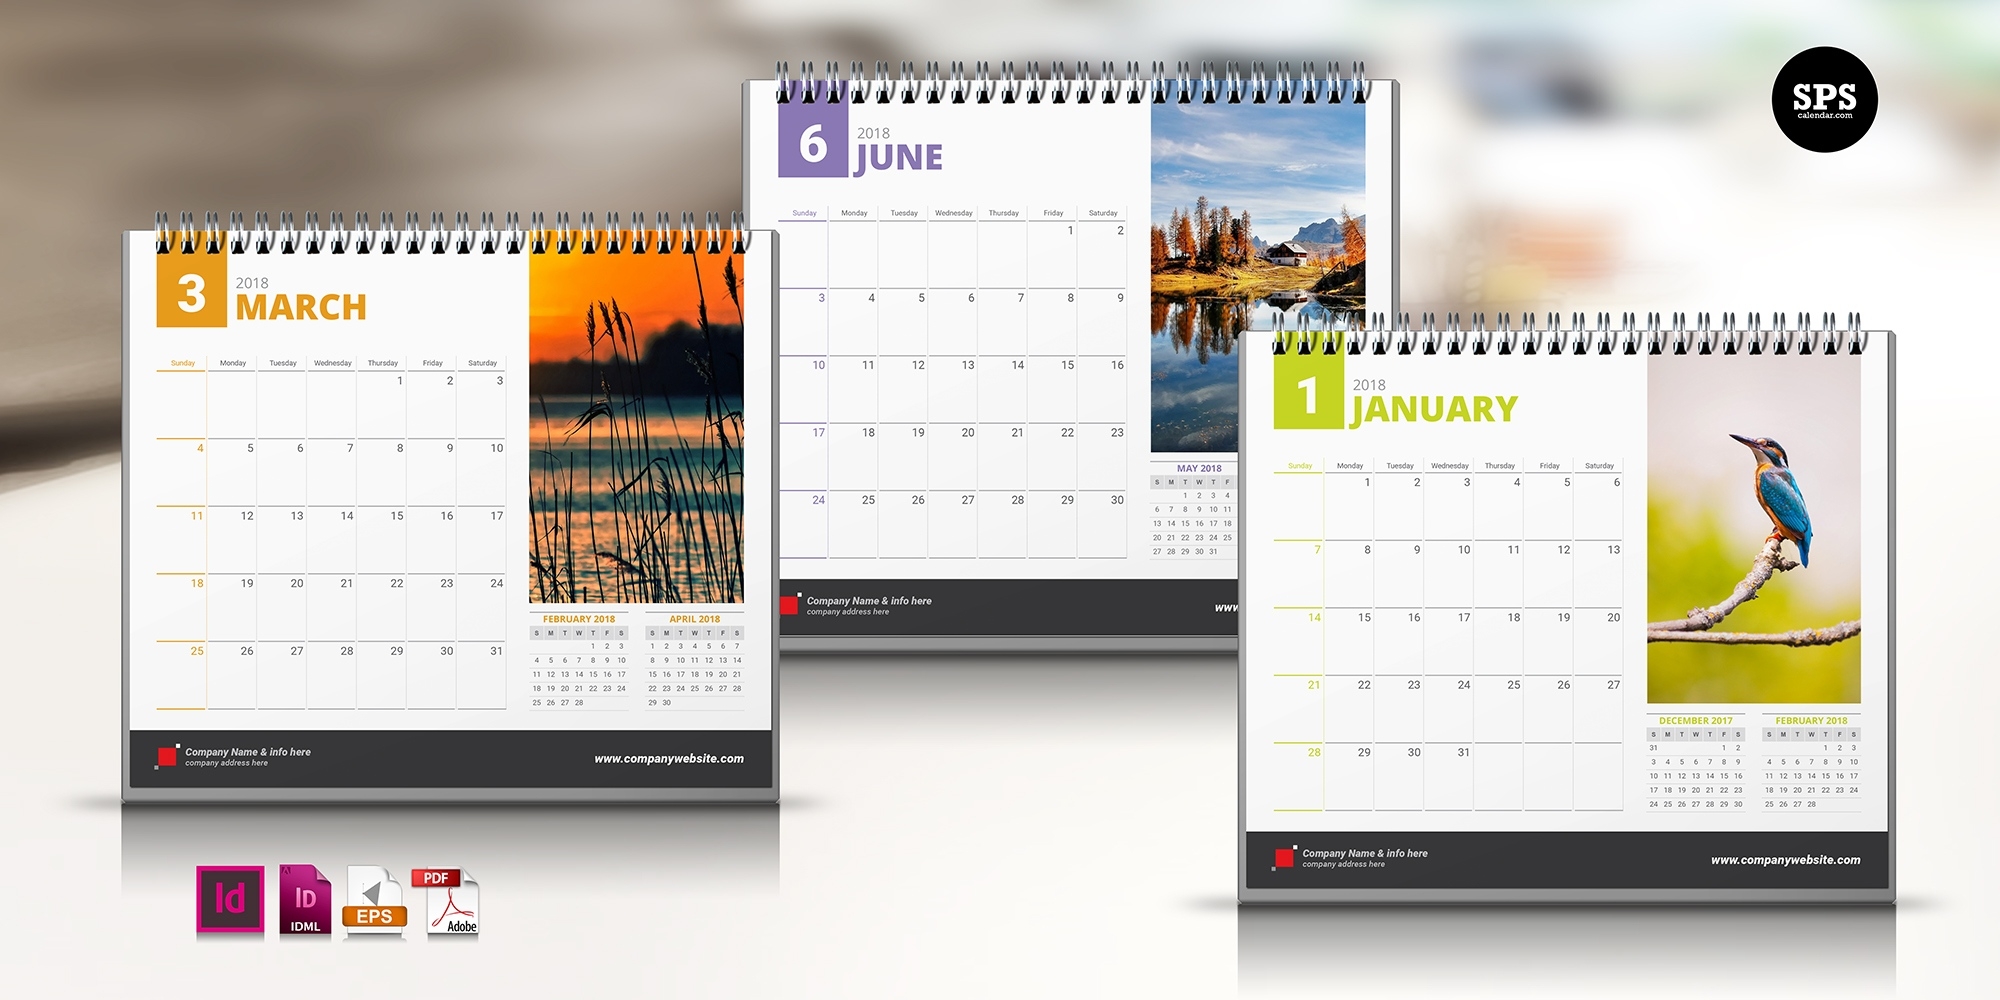 Free 2018 Indesign Calendar Template - Desk 01 - Spscalendar Calendar Template Indesign Free